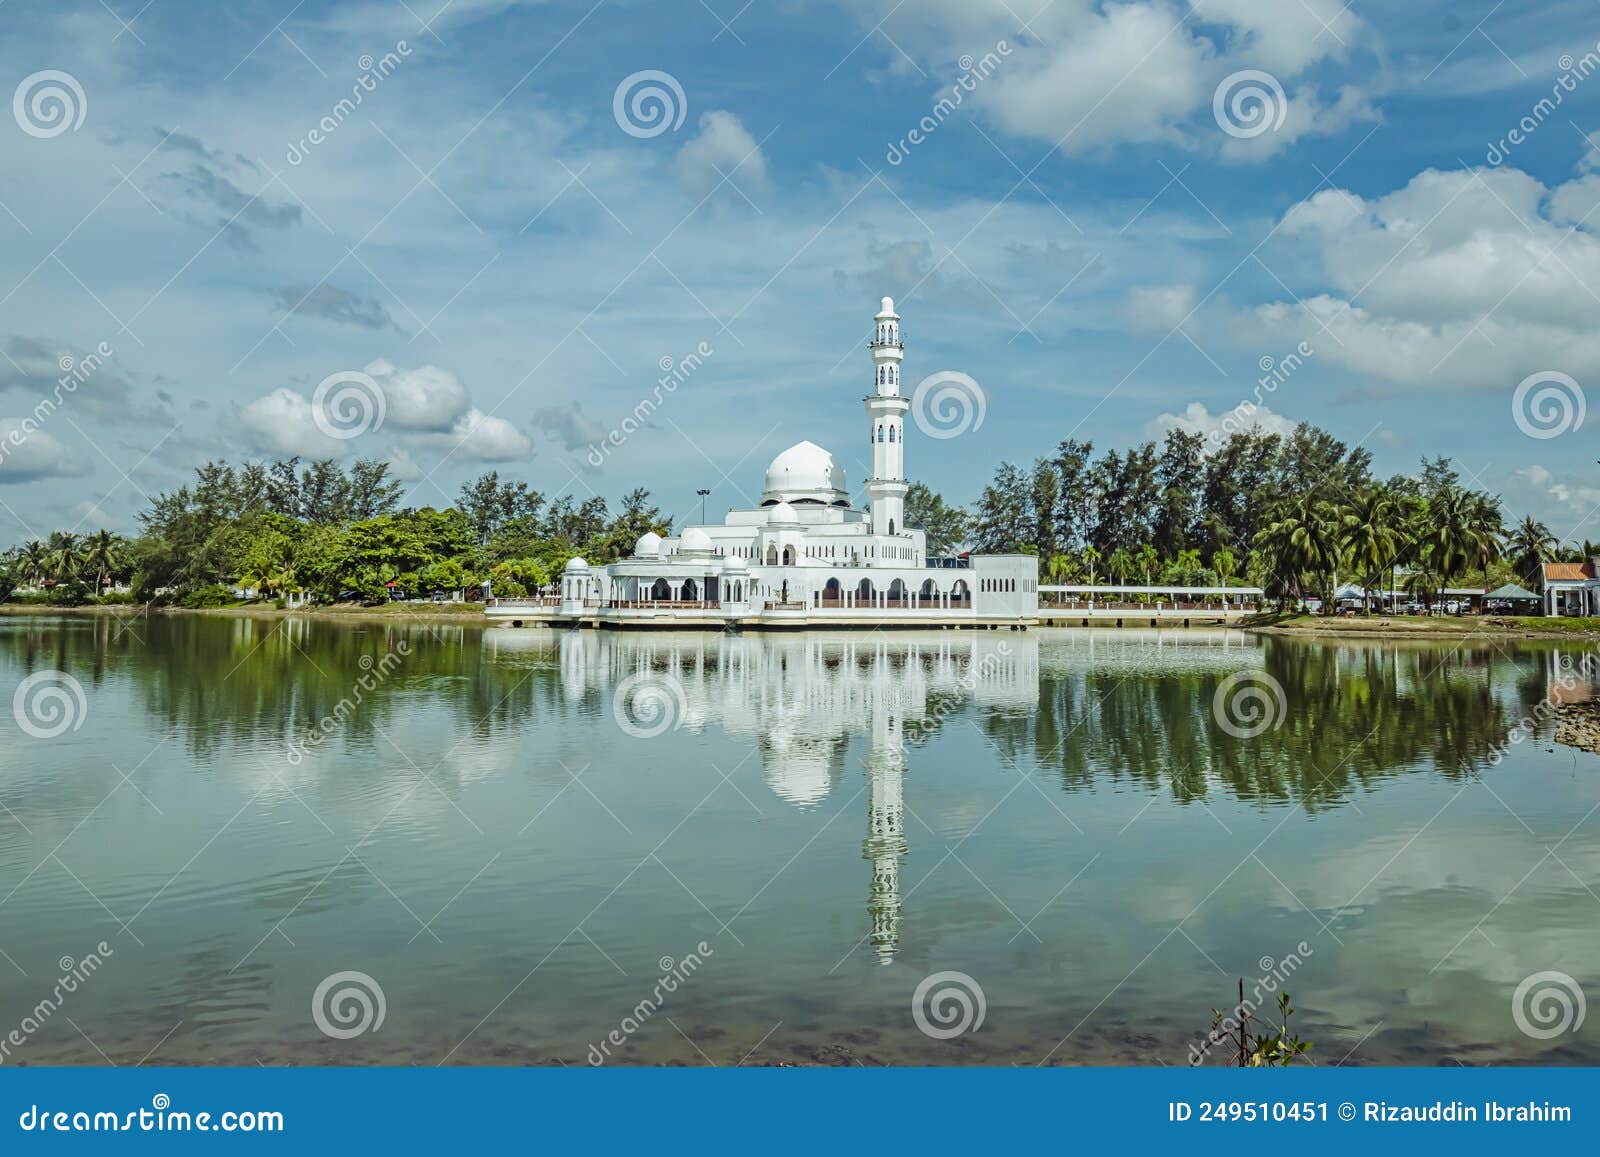 kuala ibai floating mosque or formally named as tengku tengah zaharah mosque and it`s reflection in water at terengganu, malaysia.